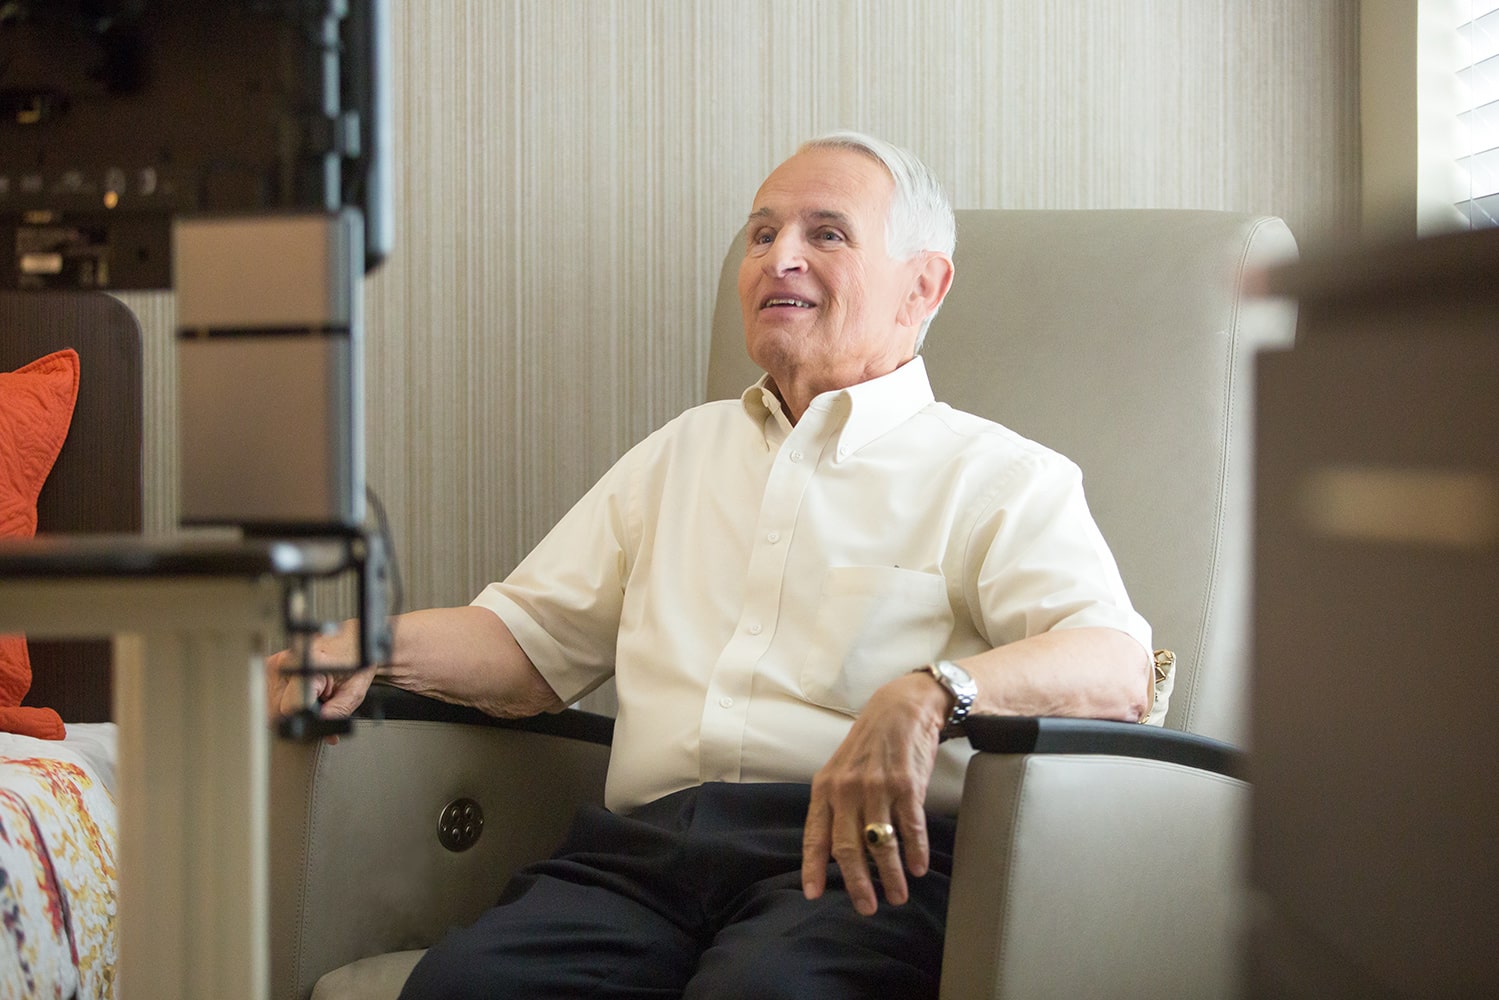 Elderly gentleman sitting in an arm chair smiling a computer screen wearing a light yellow button up shirt